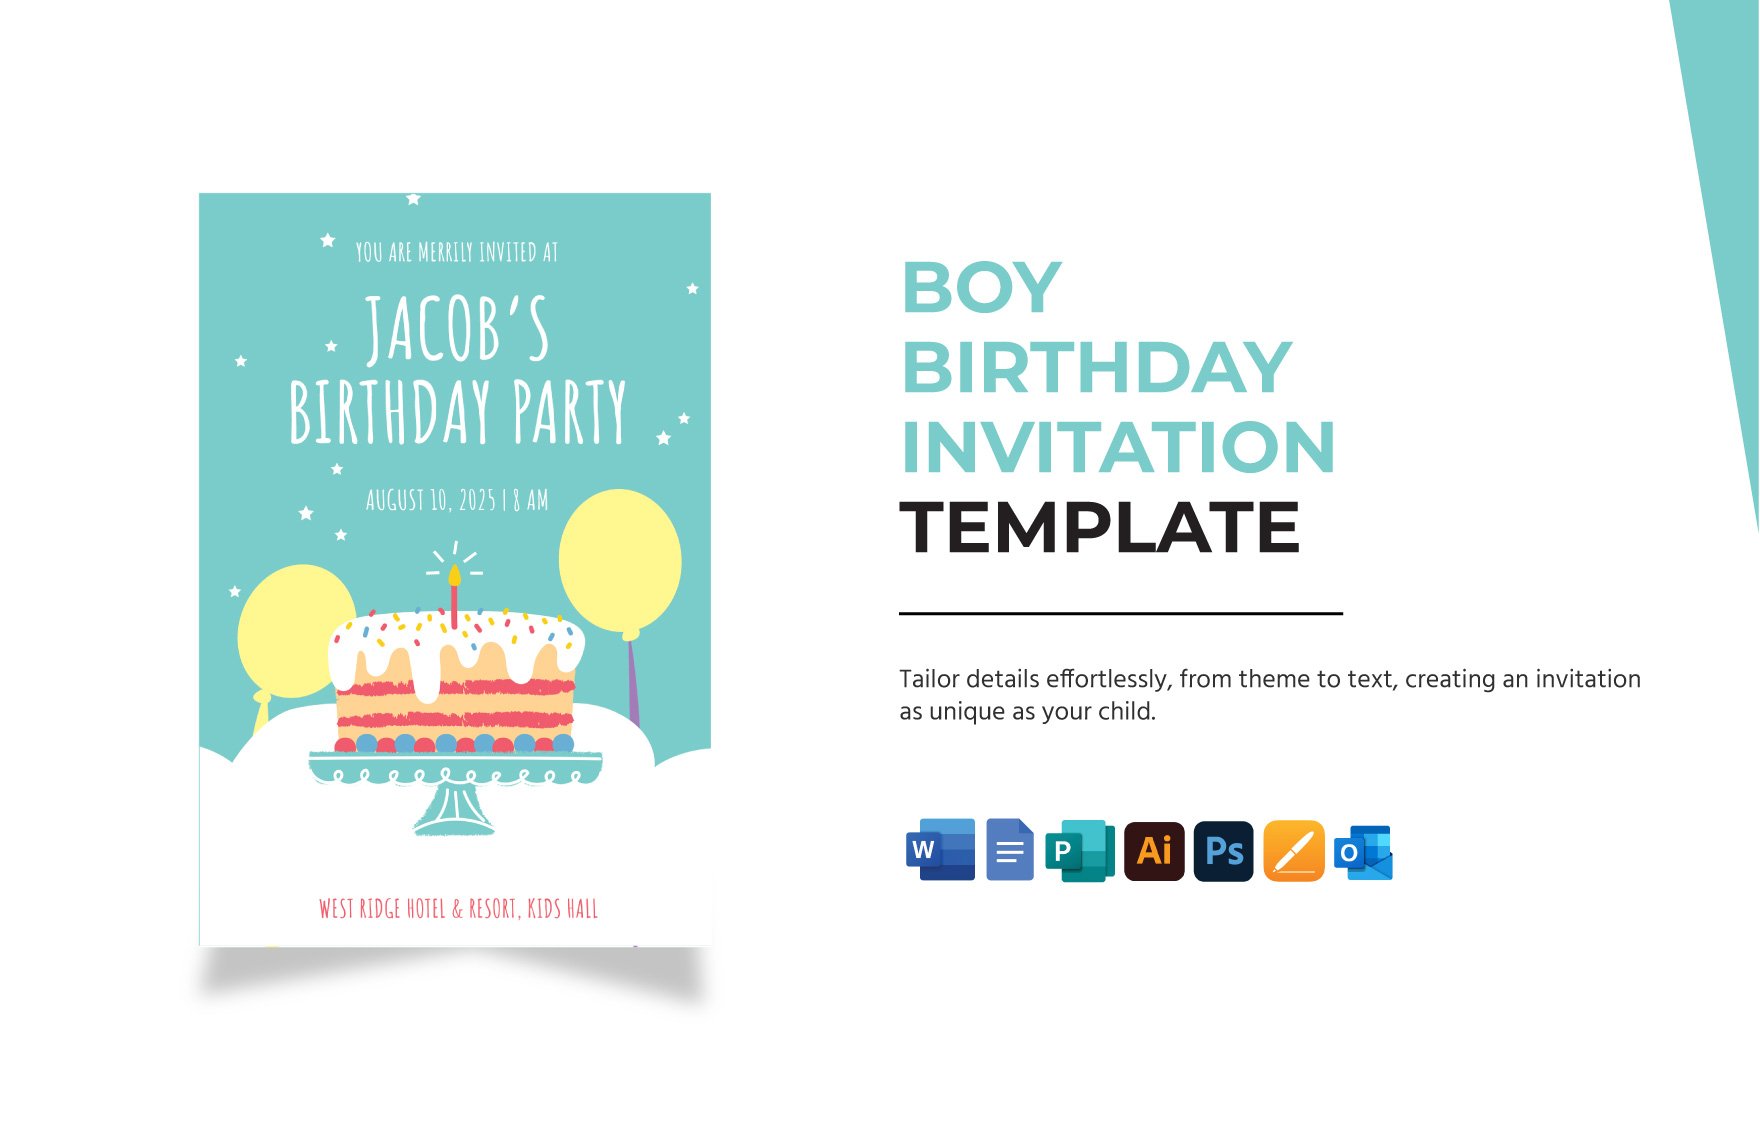 Boy Birthday Invitation Template